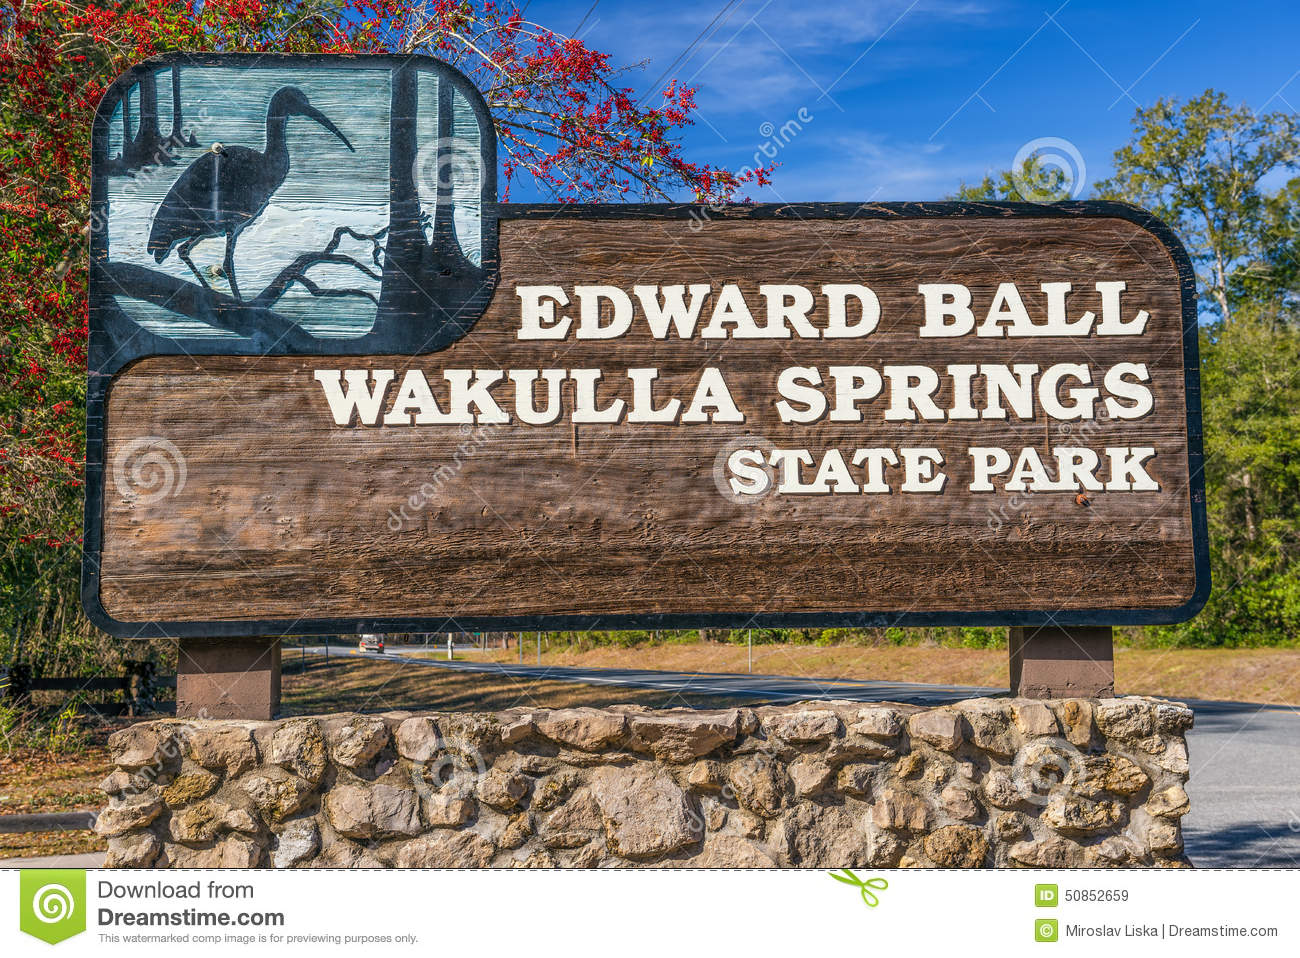 Edward Ball Wakulla Springs State Park Entrance Sign, Florida.